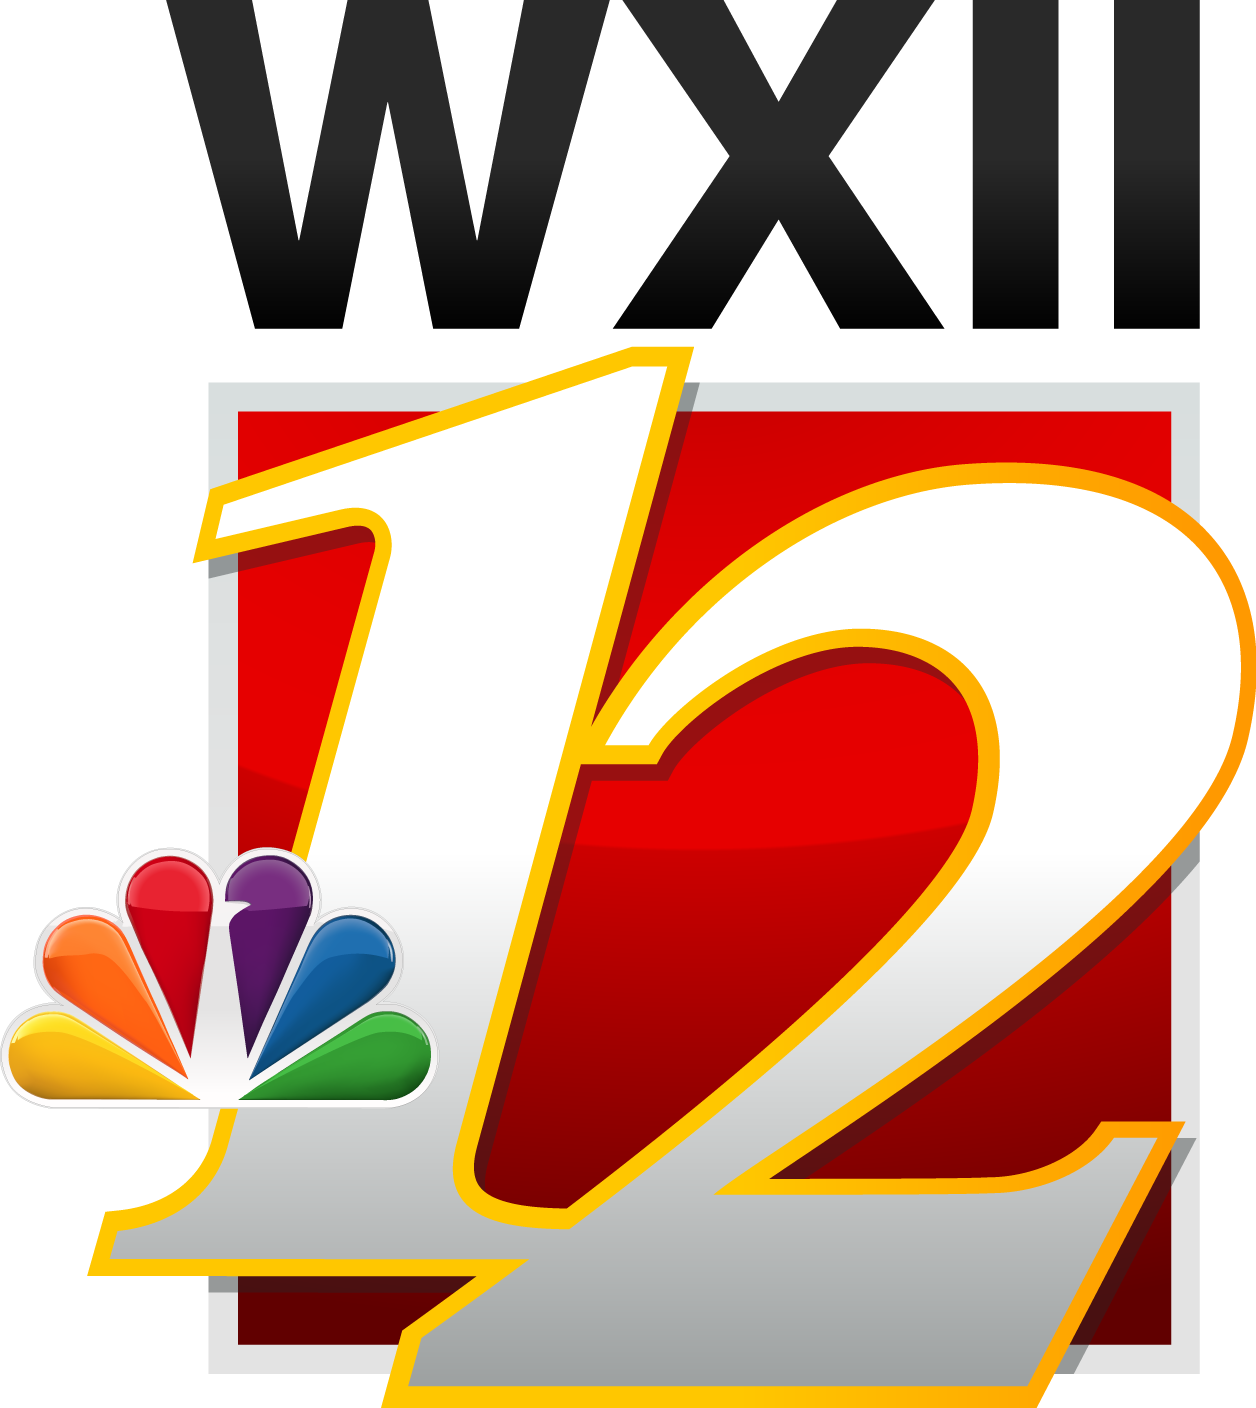 2c. WXII (Media Partner)